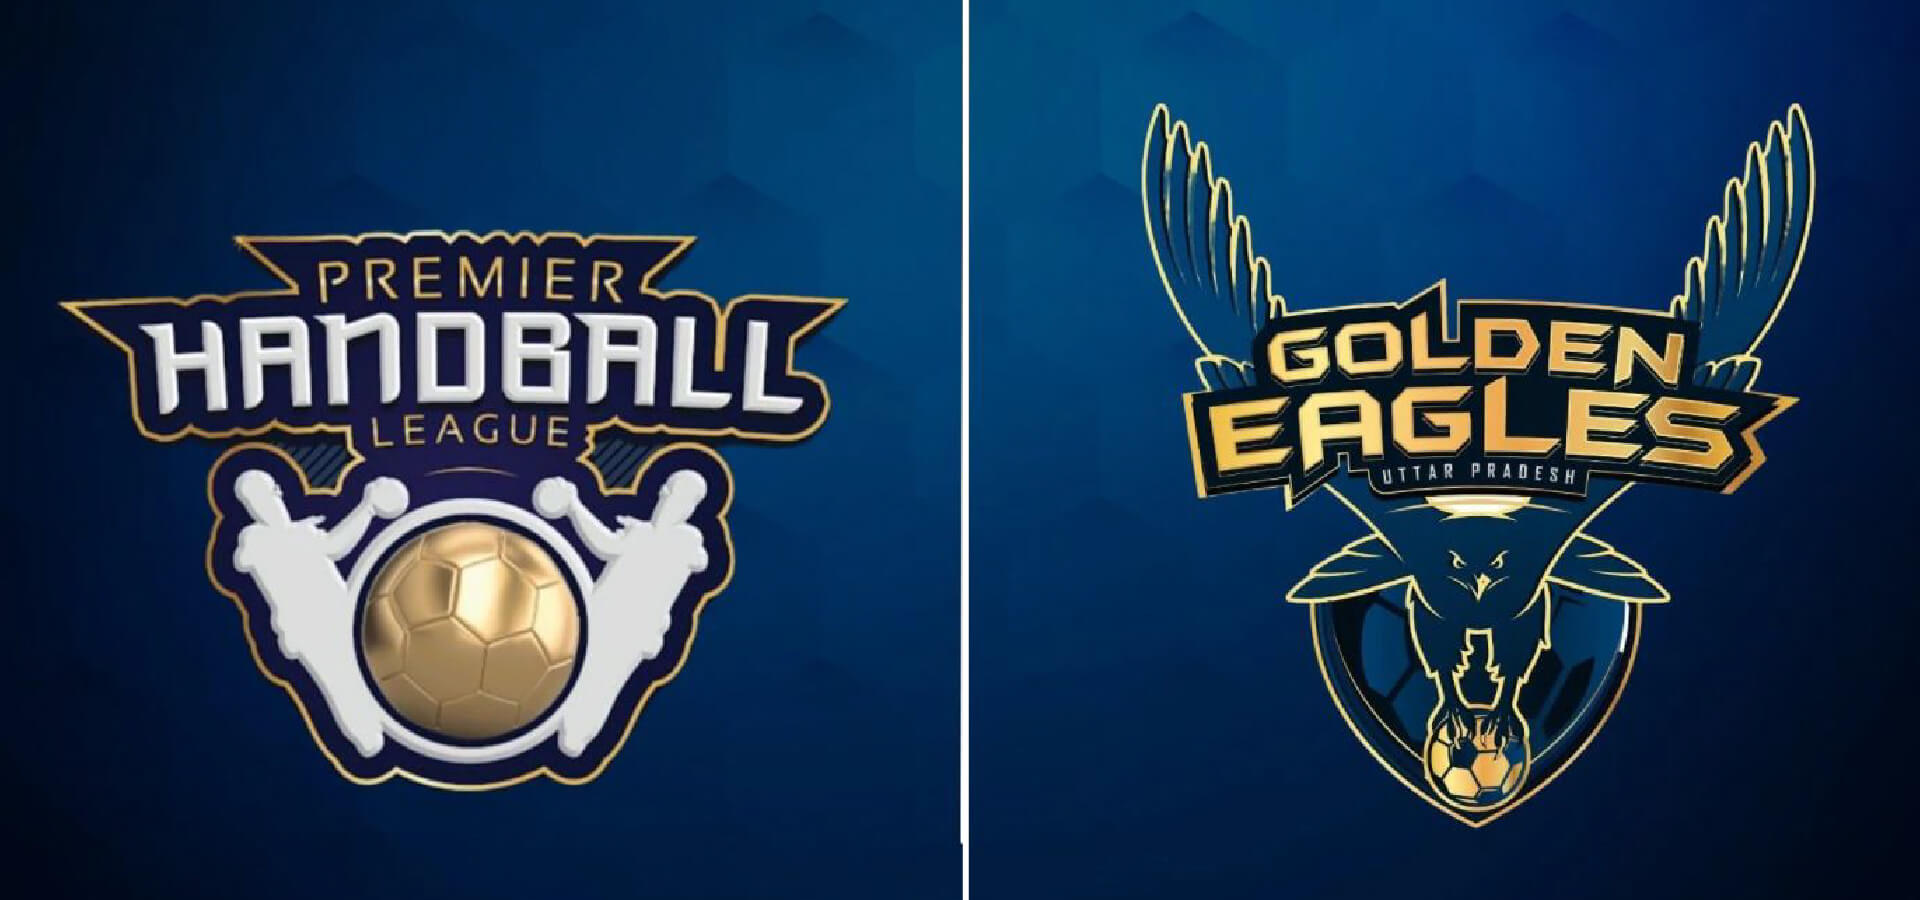 Golden Eagles Uttar Pradesh joins Premier Handball League as second franchise